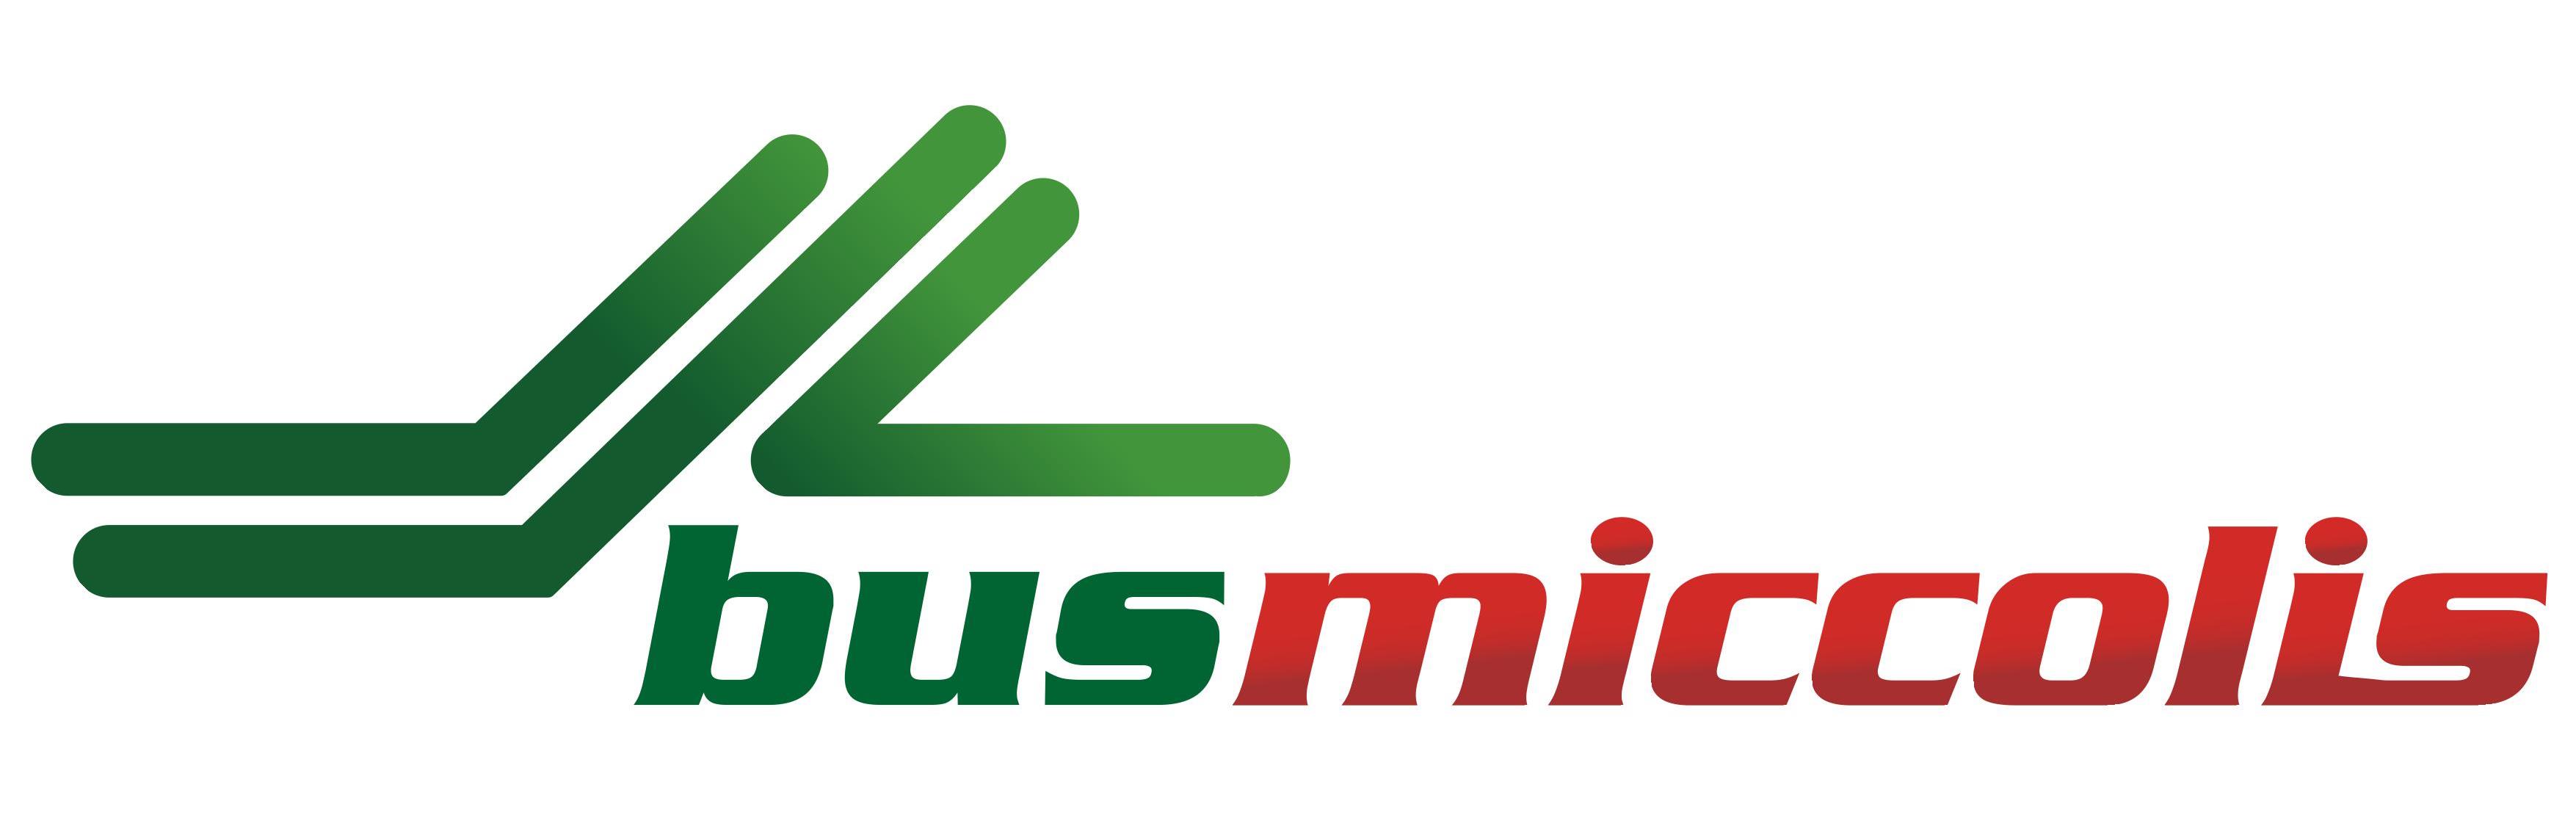 Busmiccolis-logo